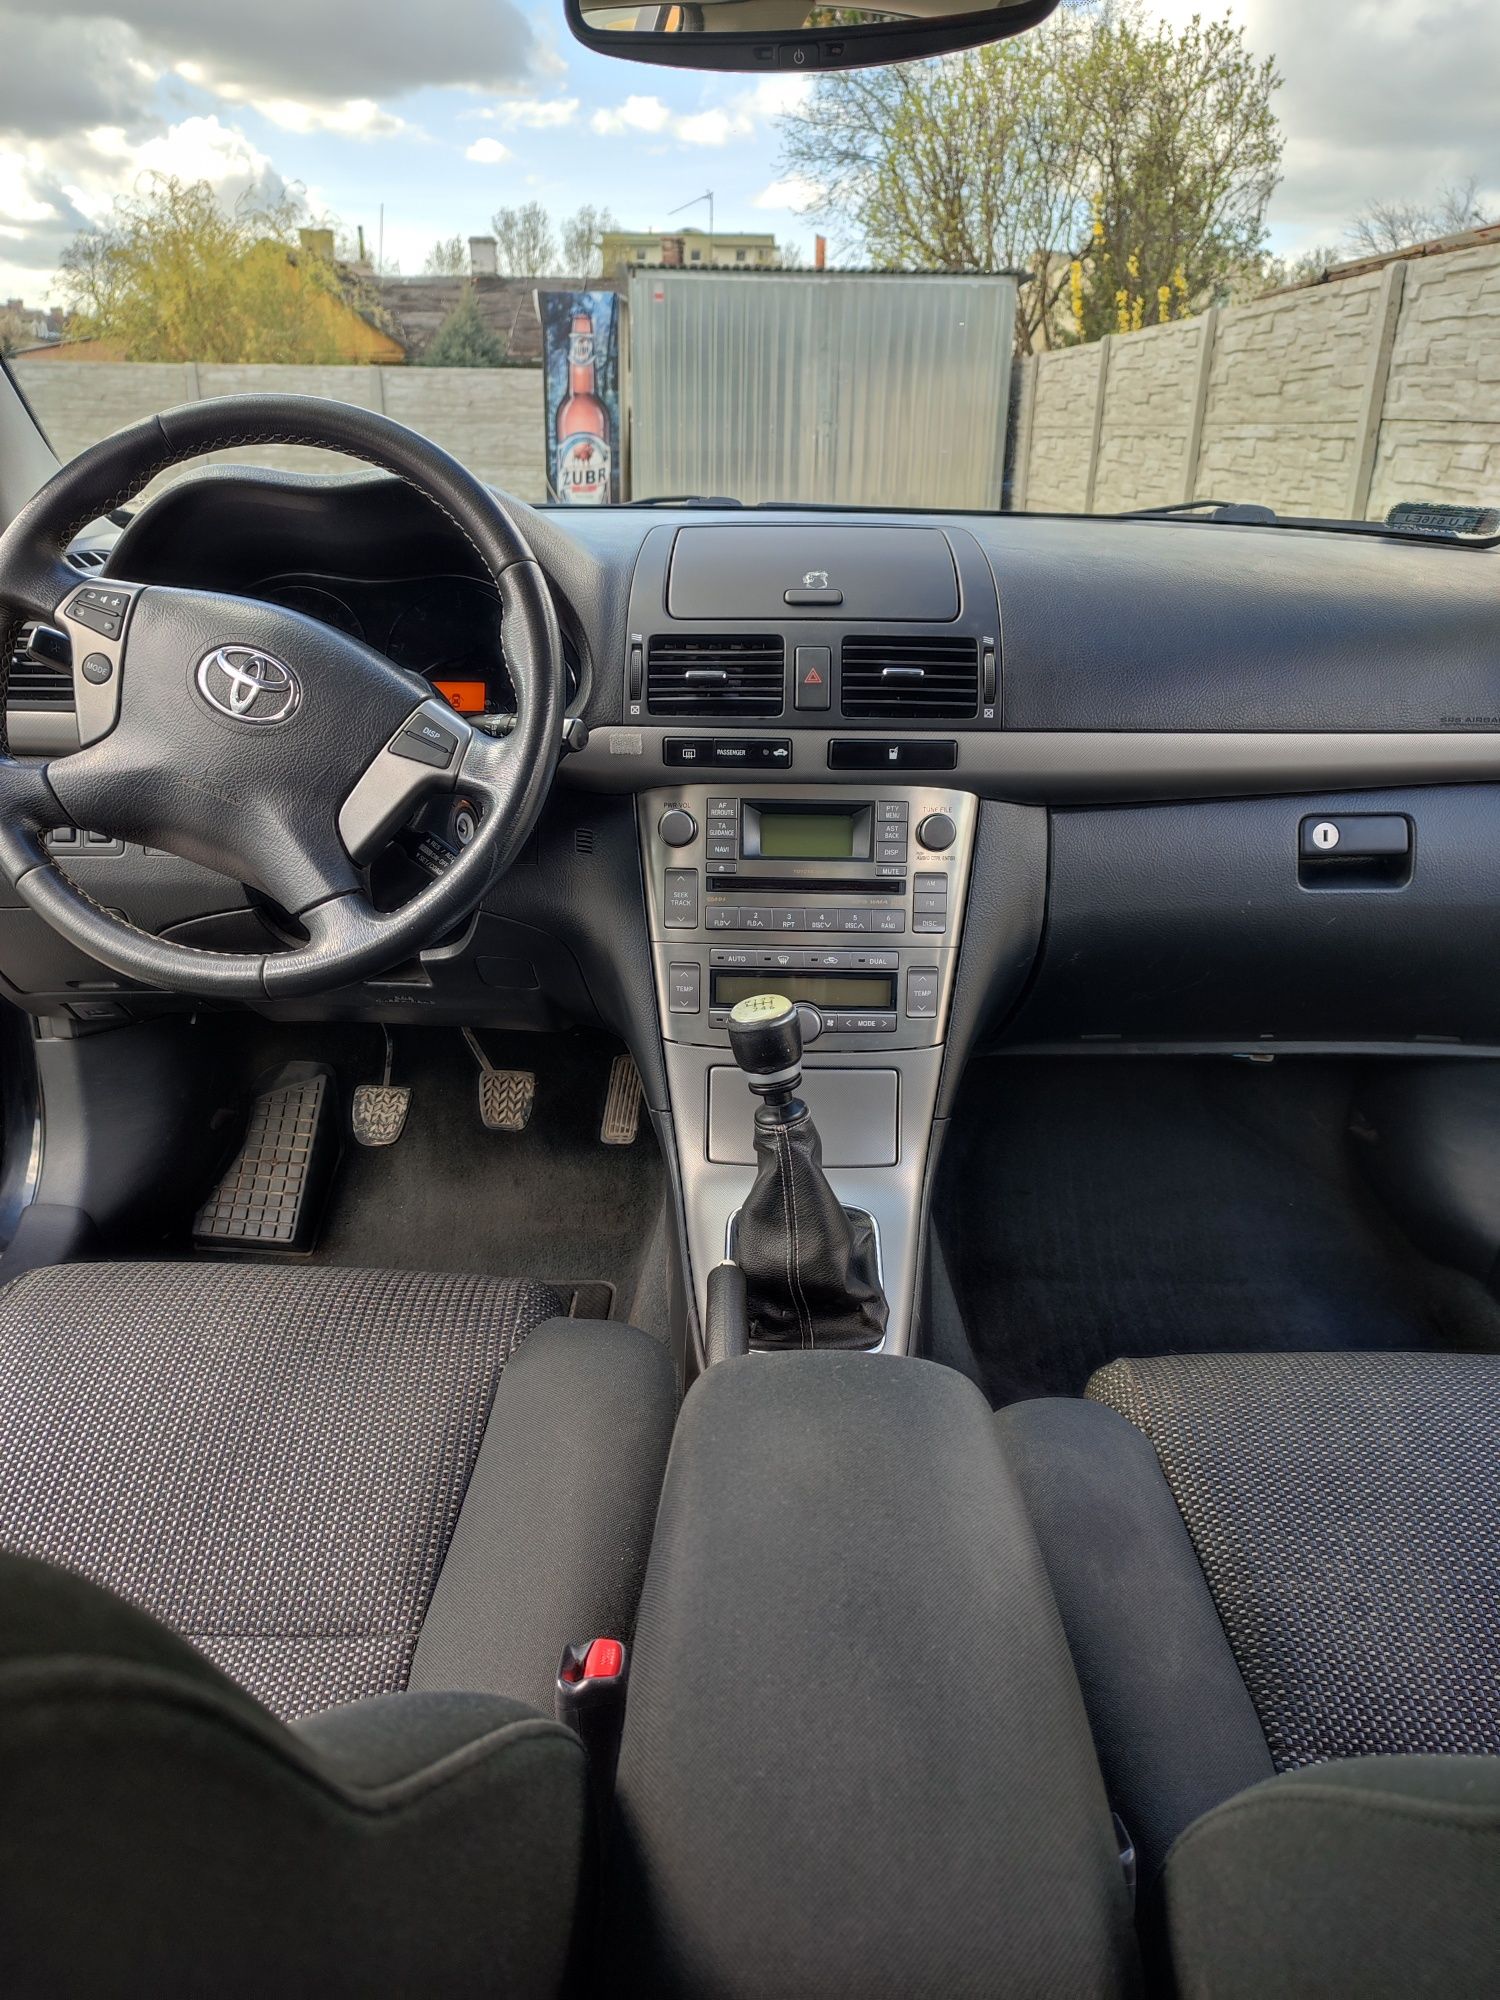 Toyota Avensis 2.0 D-4D 126km Hatchback 2 komplety kół